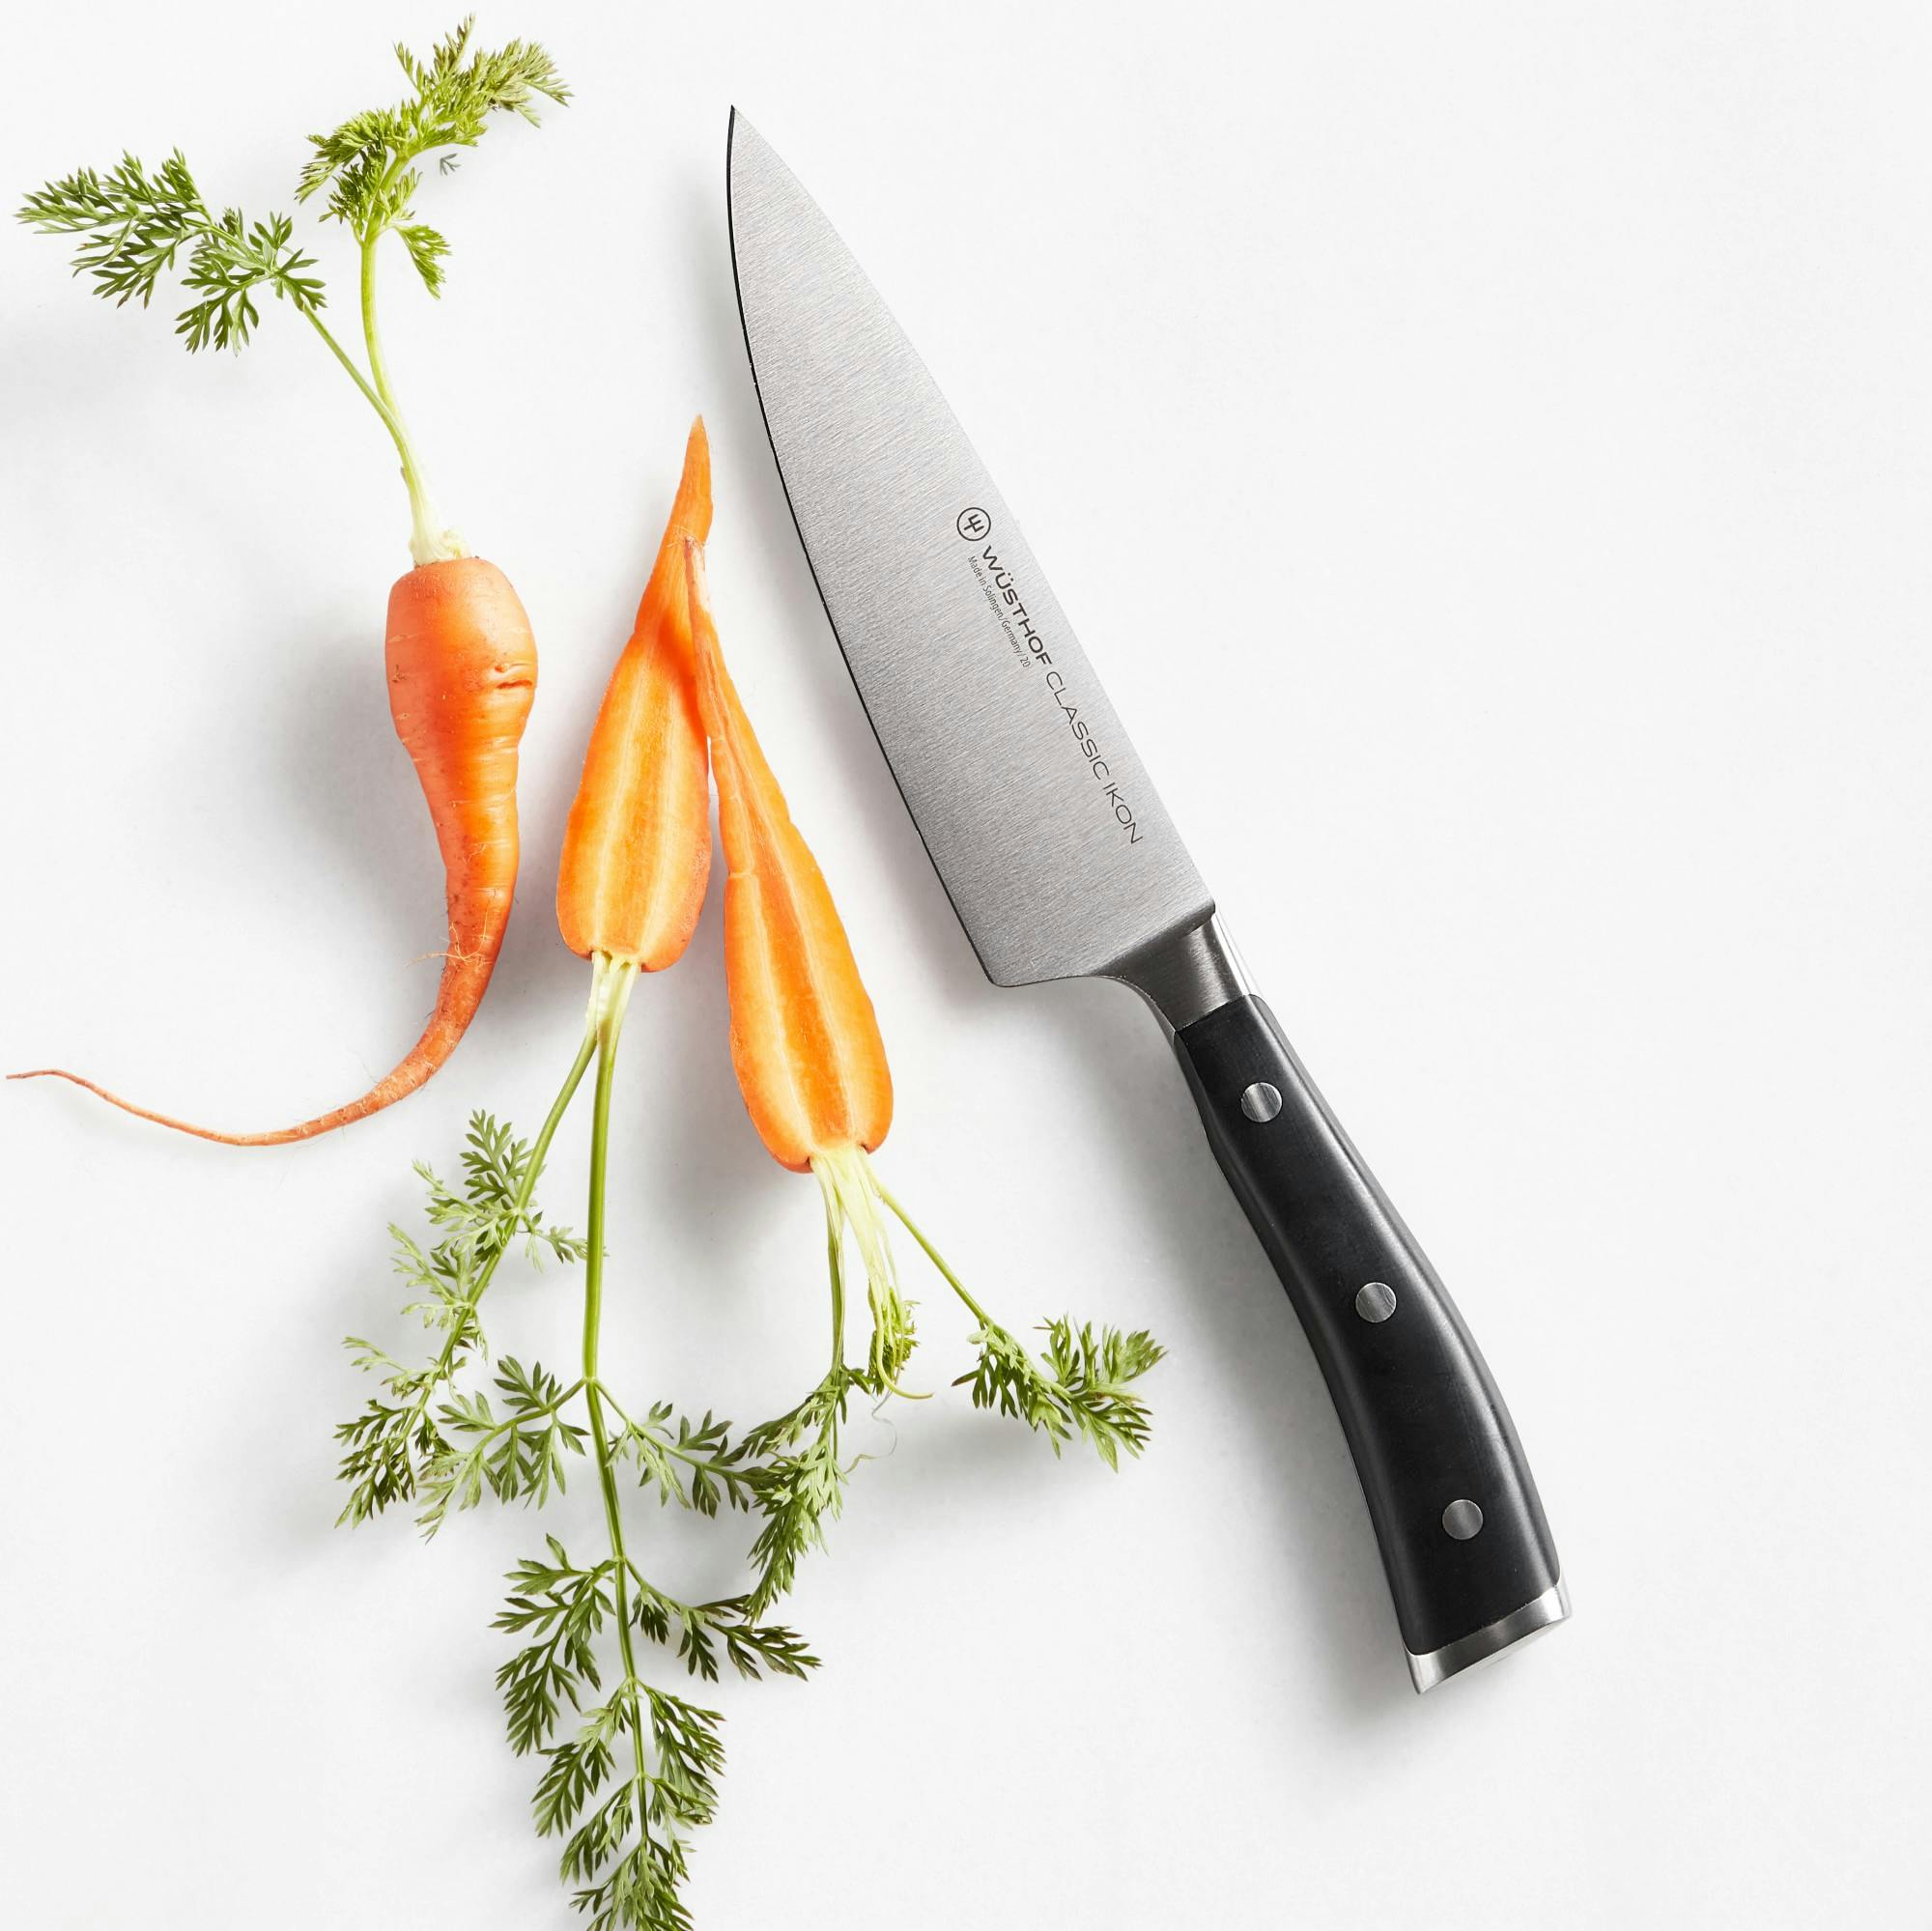 WÜSTHOF Classic Ikon 6" Chef's Knife